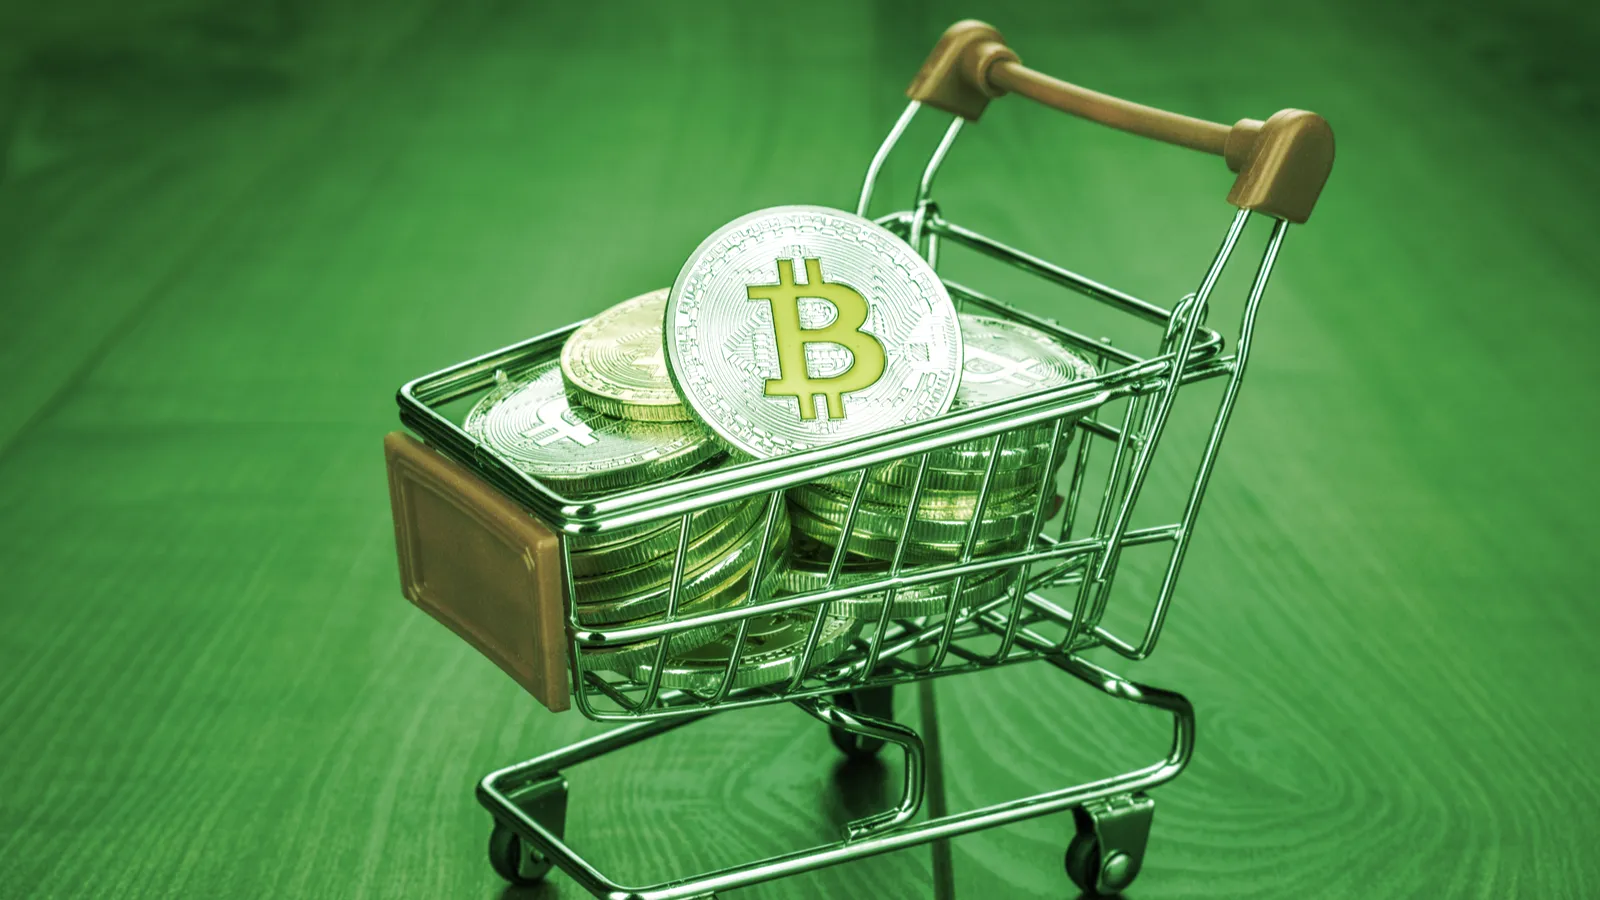 Shopping for Bitcoin. Image: Shutterstock